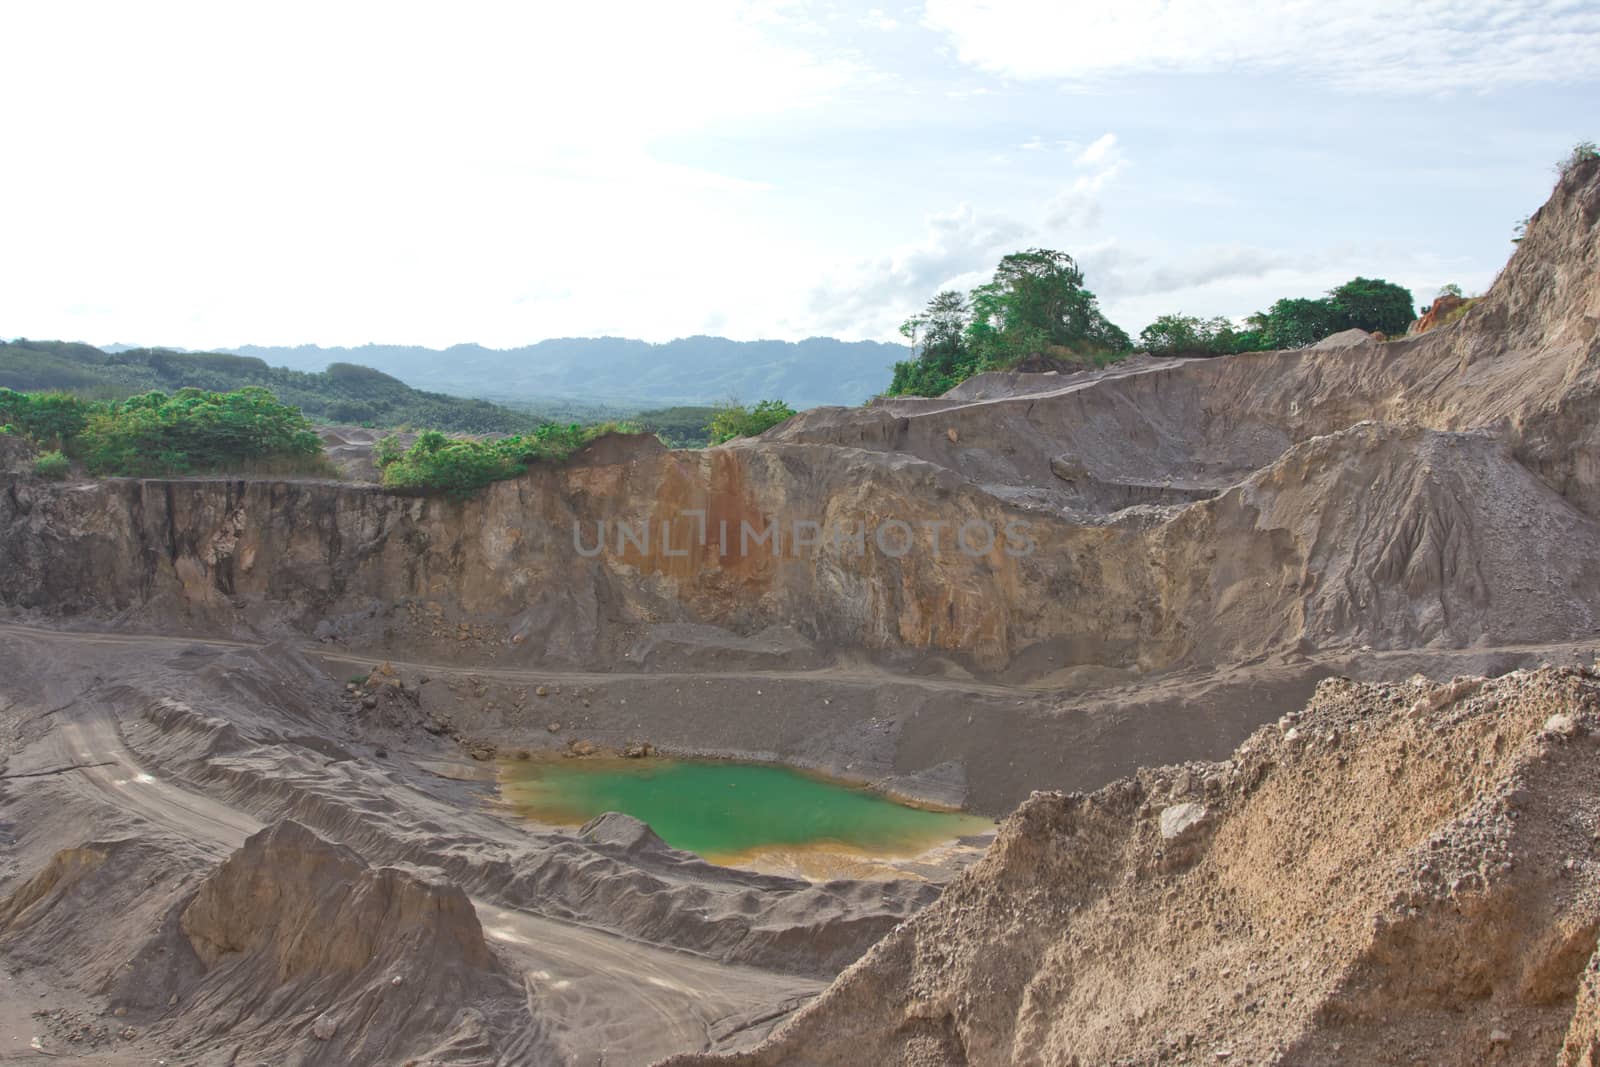 Blue lake in mining industrial  by wyoosumran